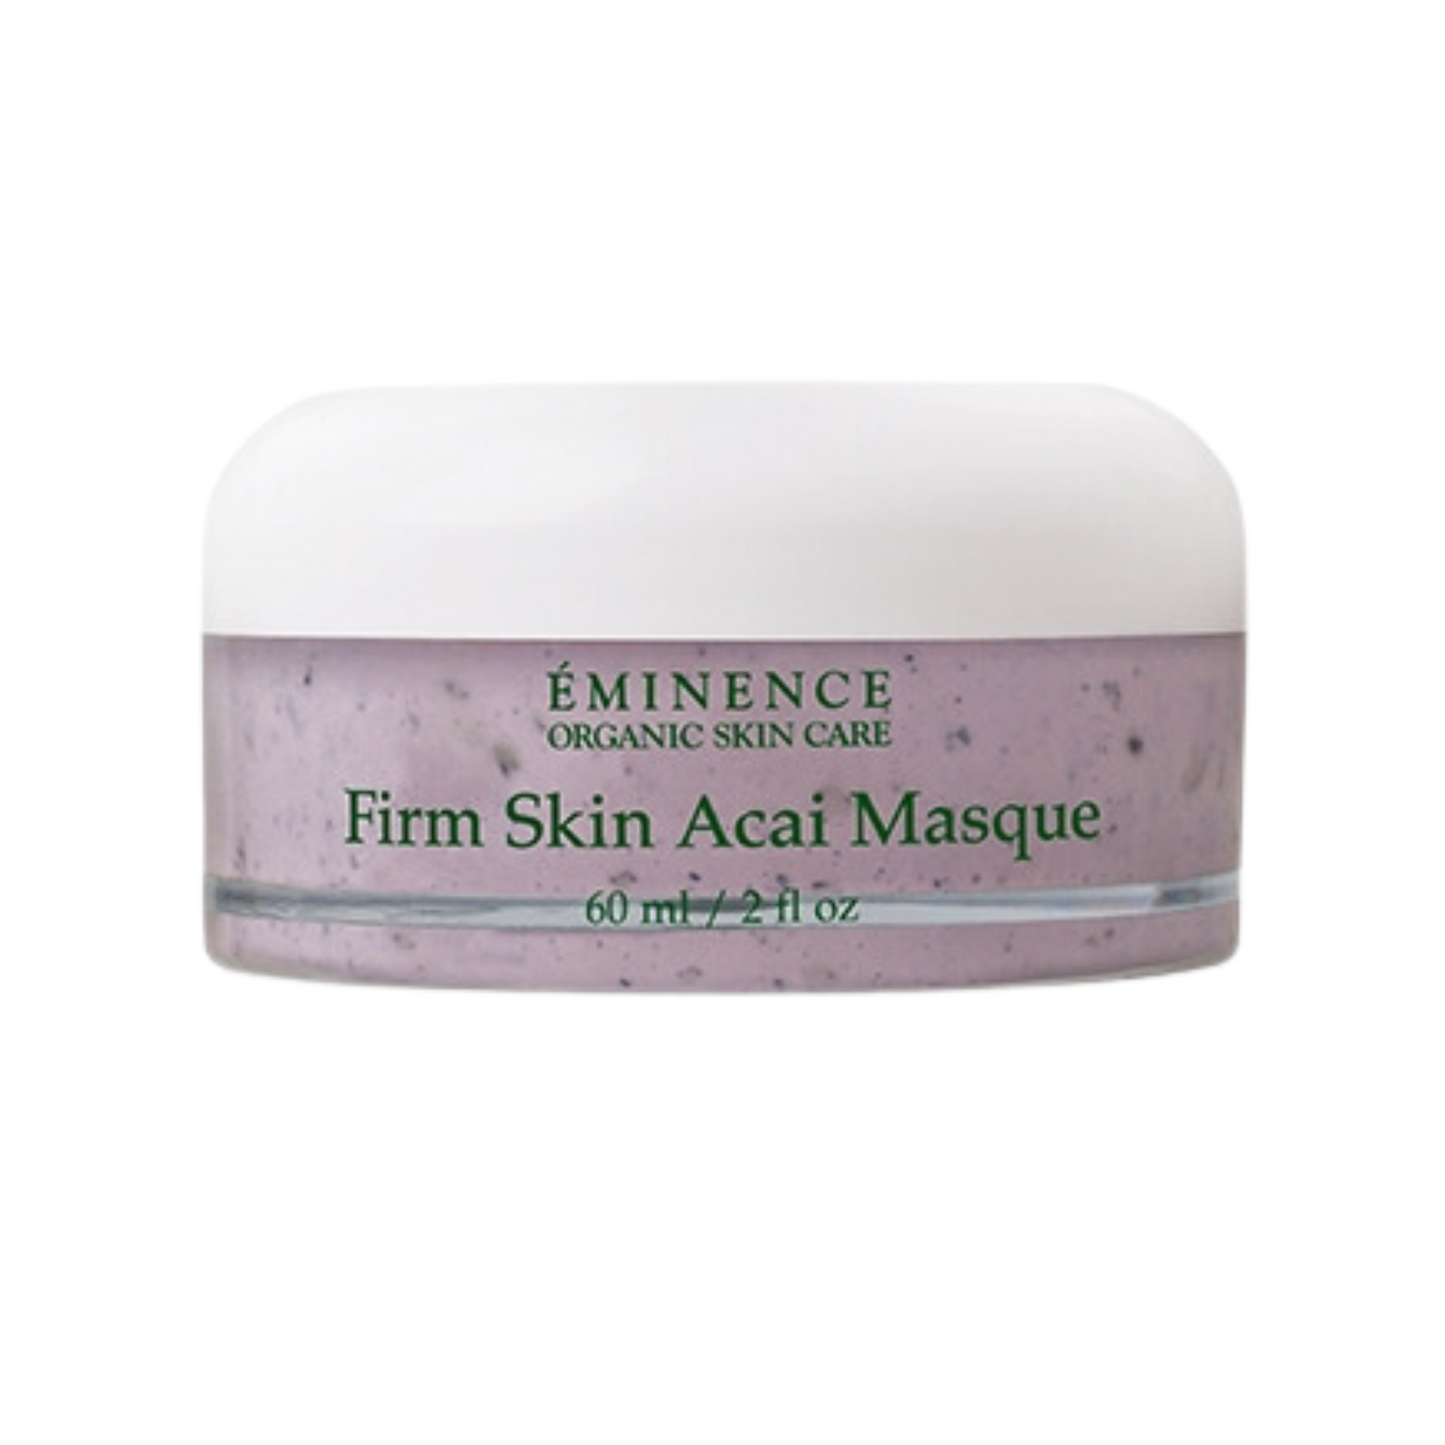 Firm Skin Acai Masque - Eminence Organic Skin Care